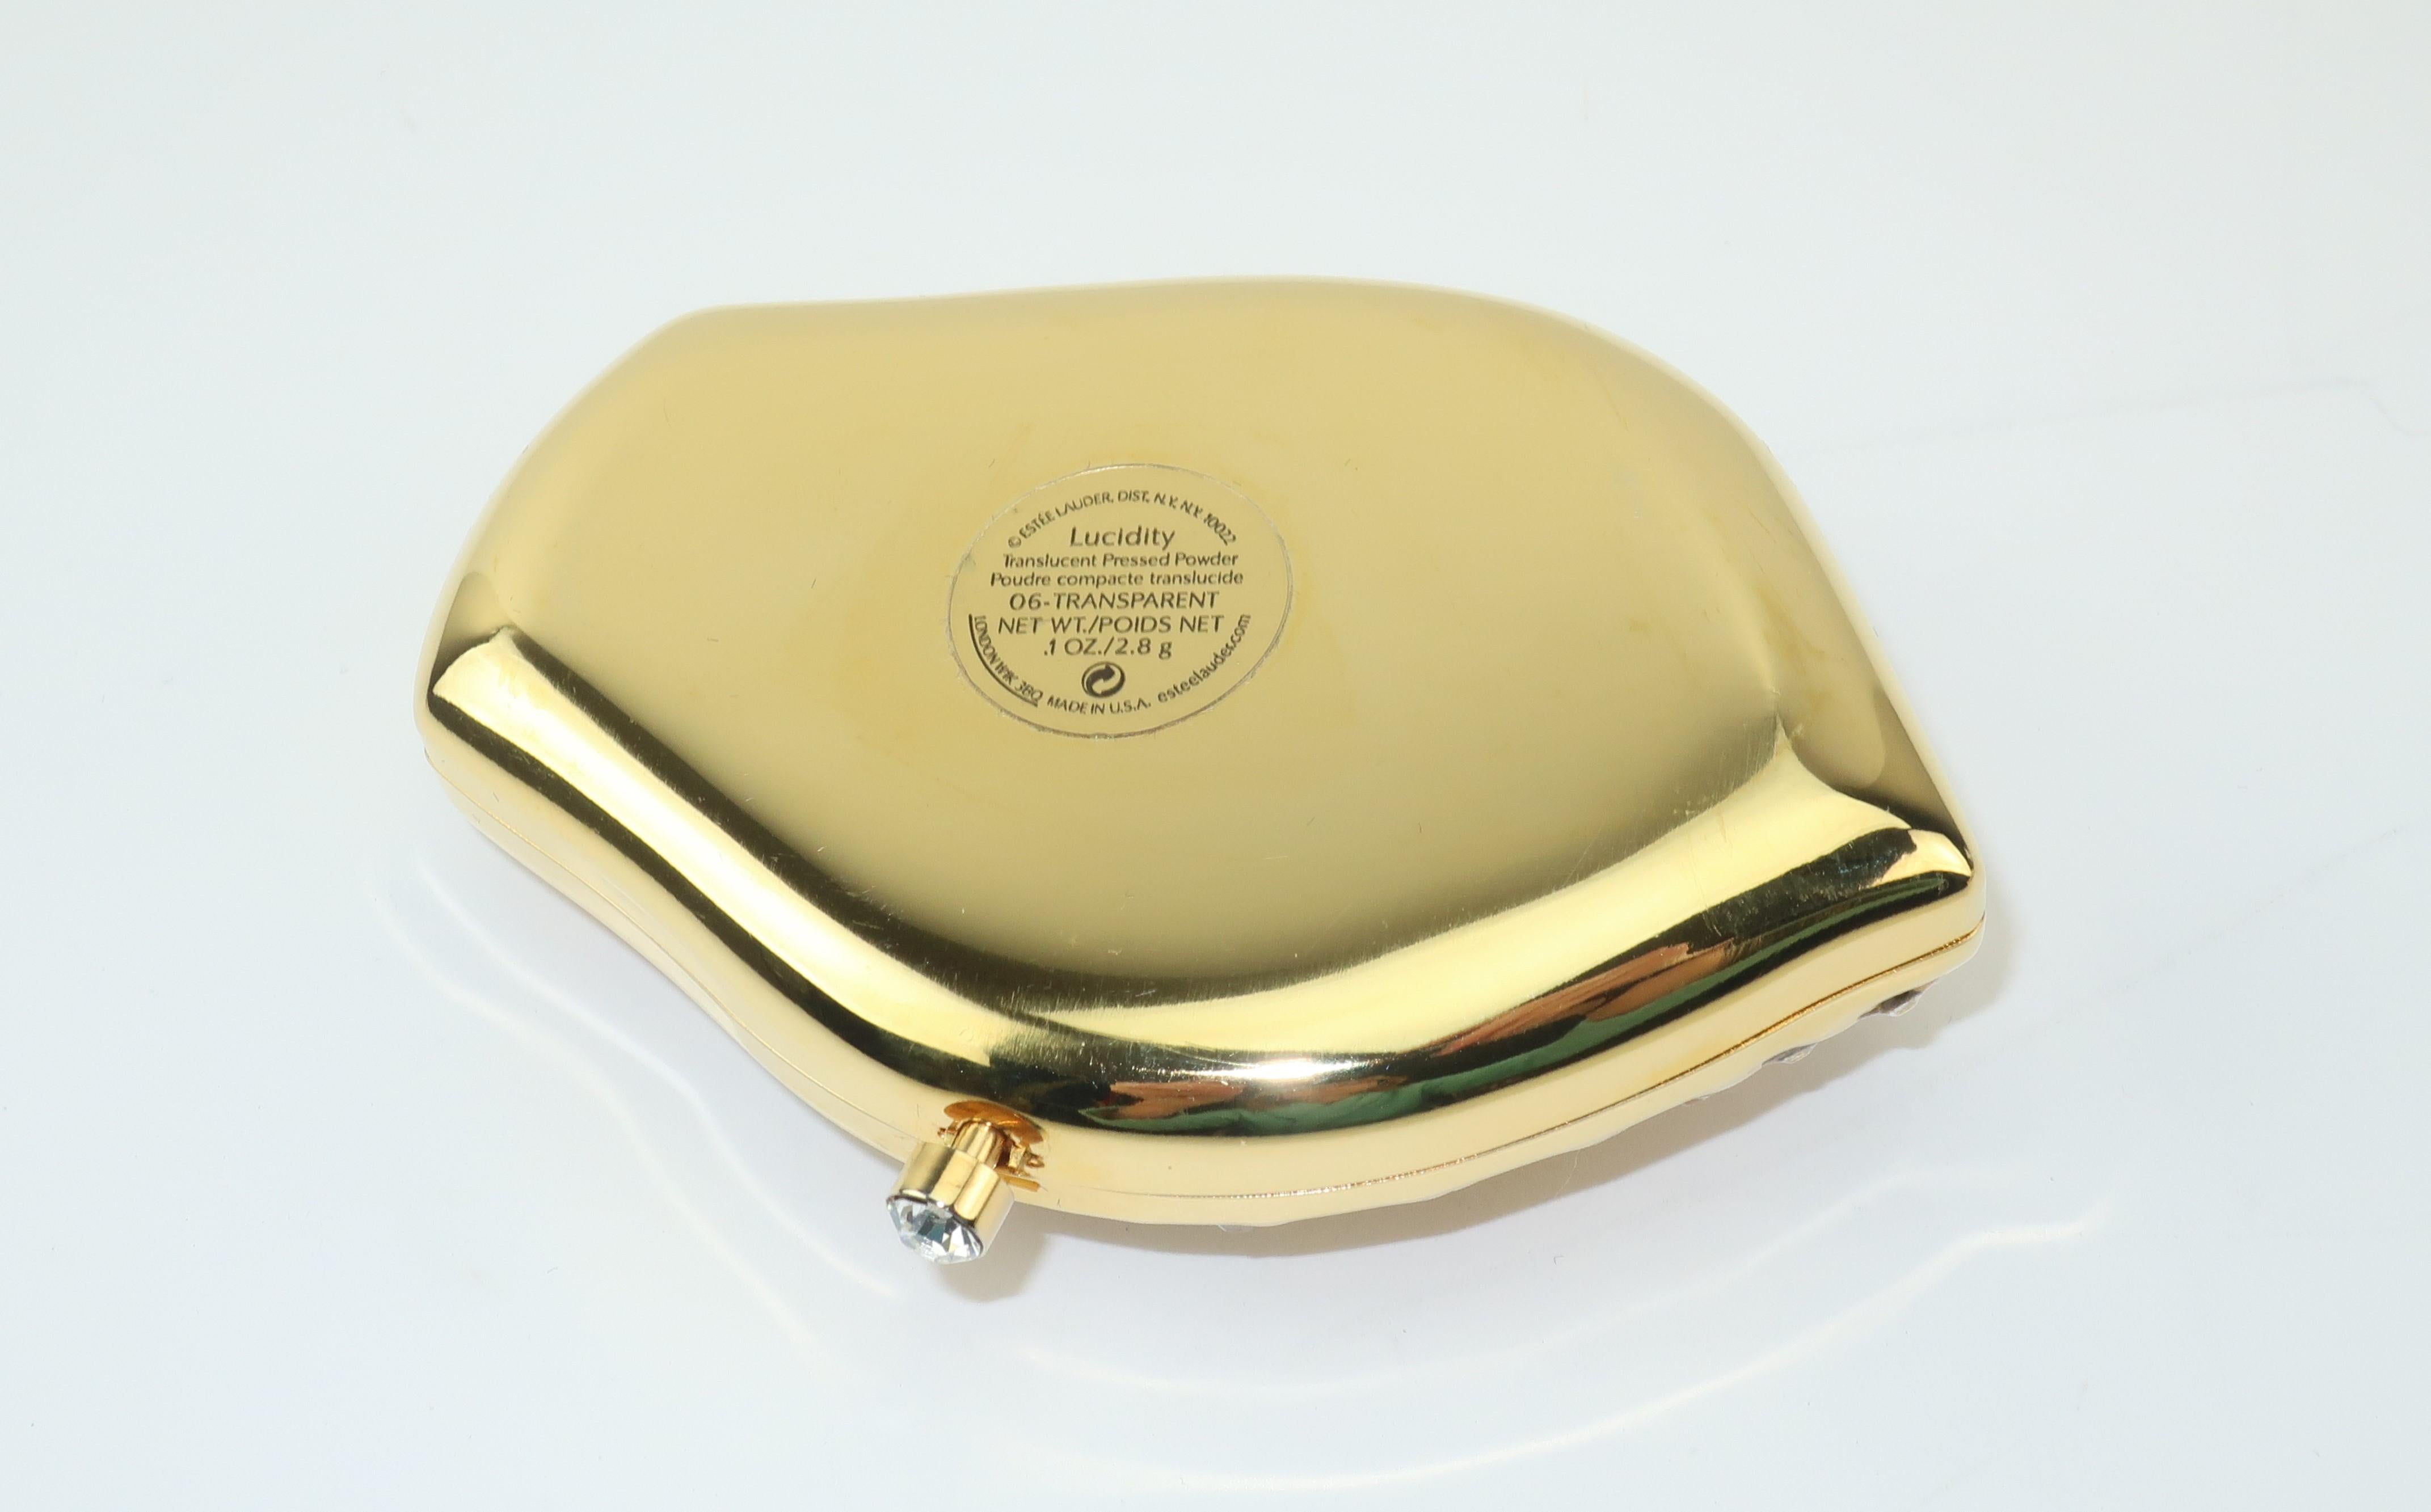 Estee Lauder Golden Shell Powder Compact 1